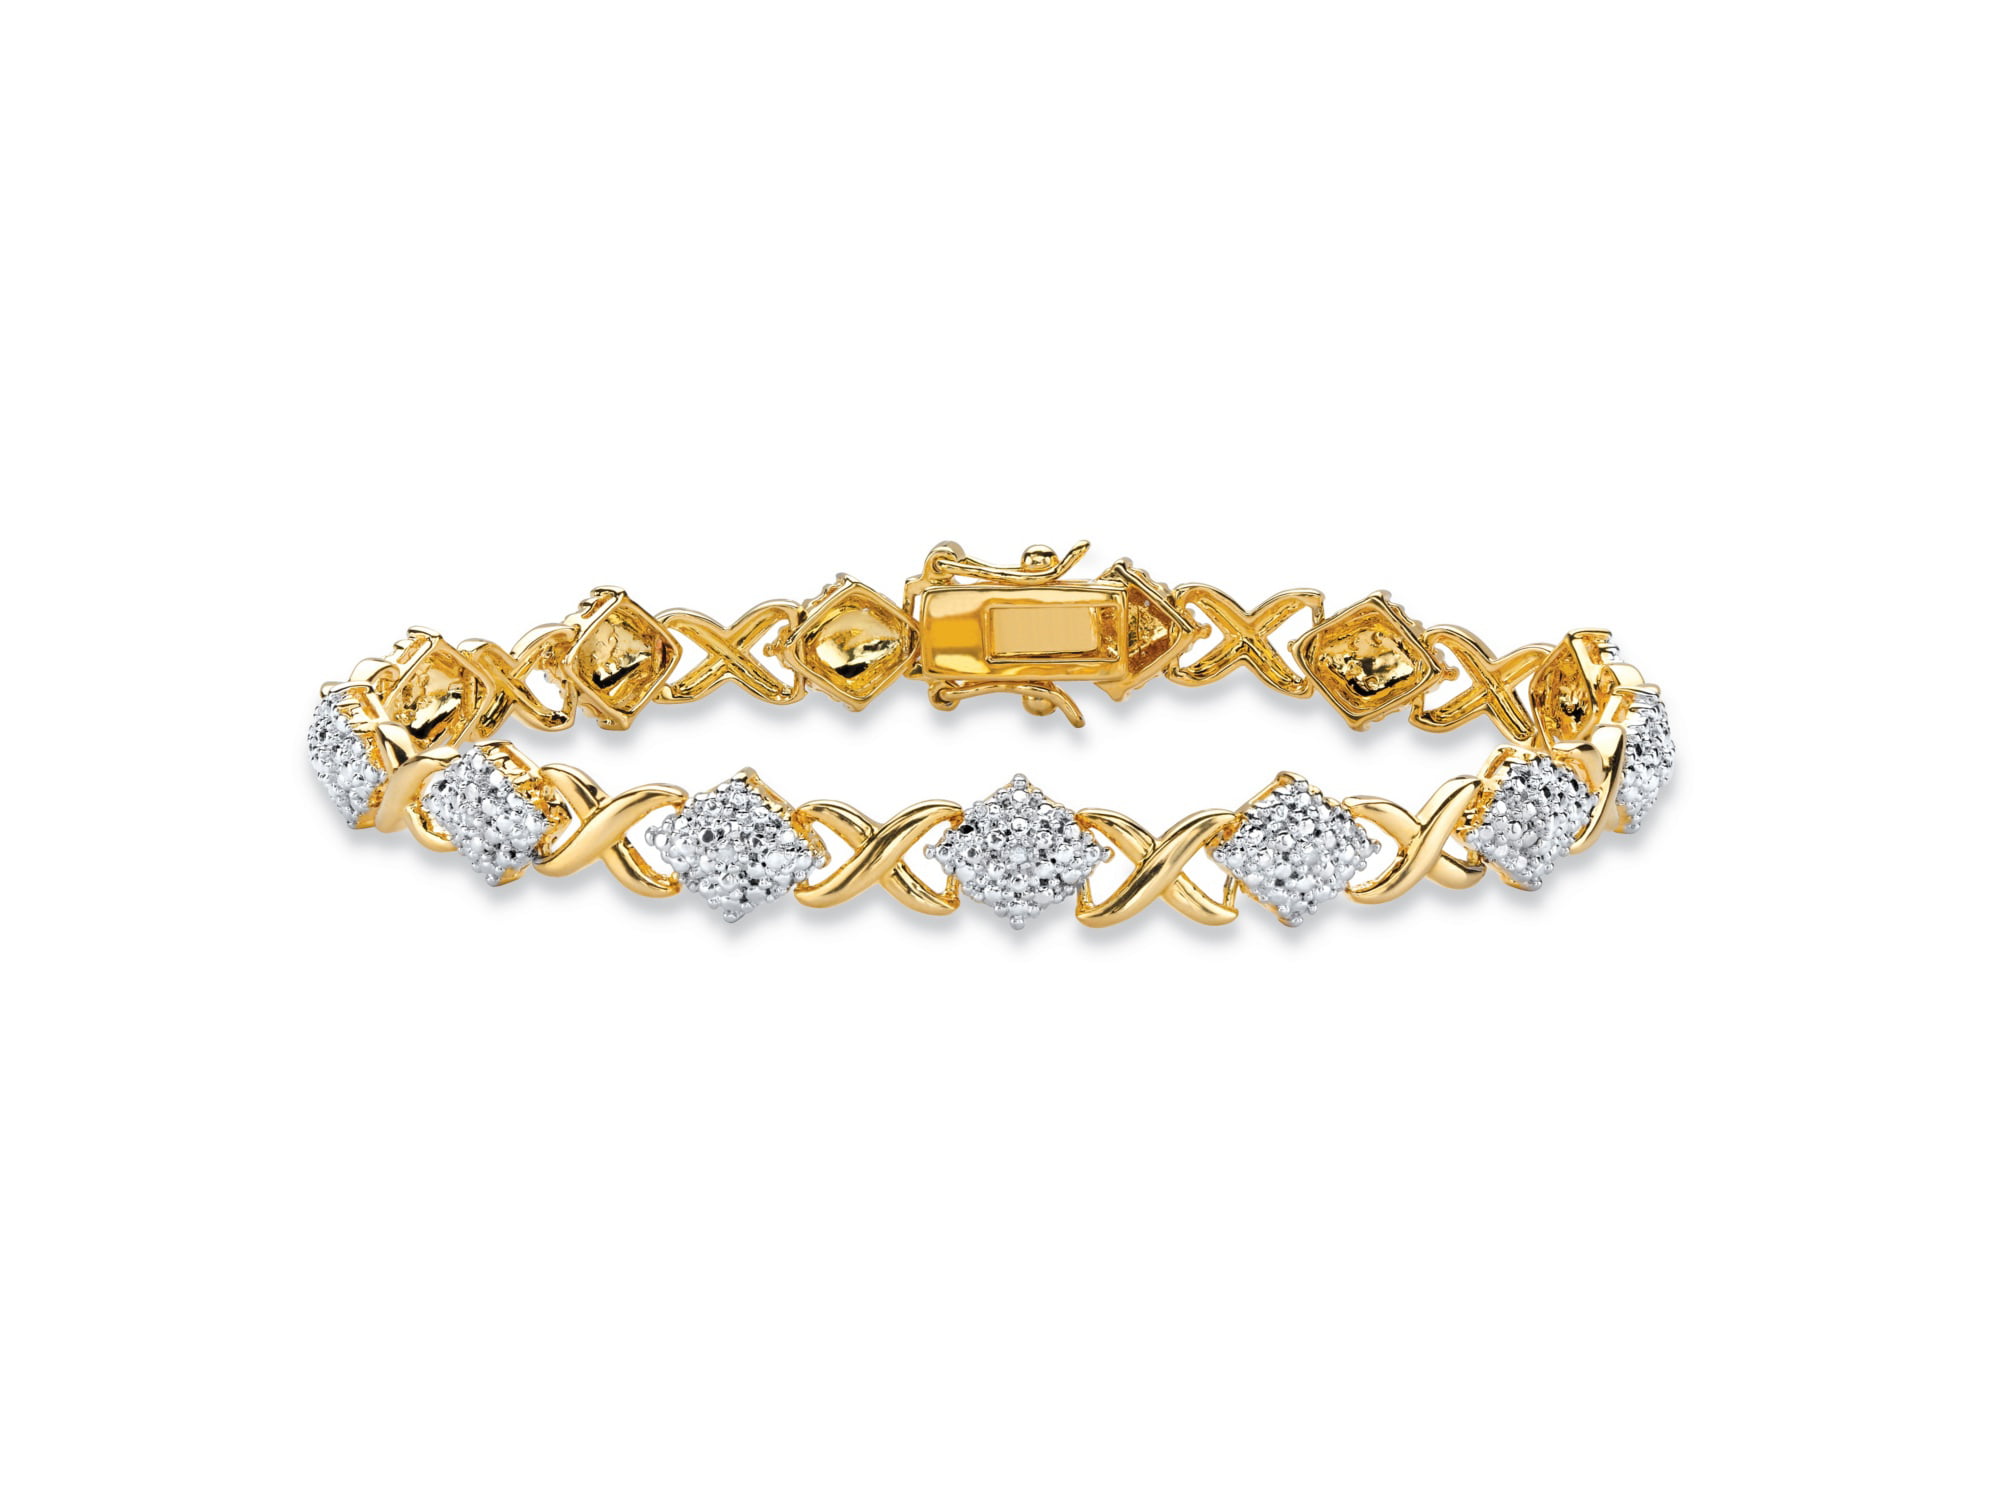 Vintage Style Jewellery Pink Gemstones Bracelet 18K White gold plated 7.5’’ 